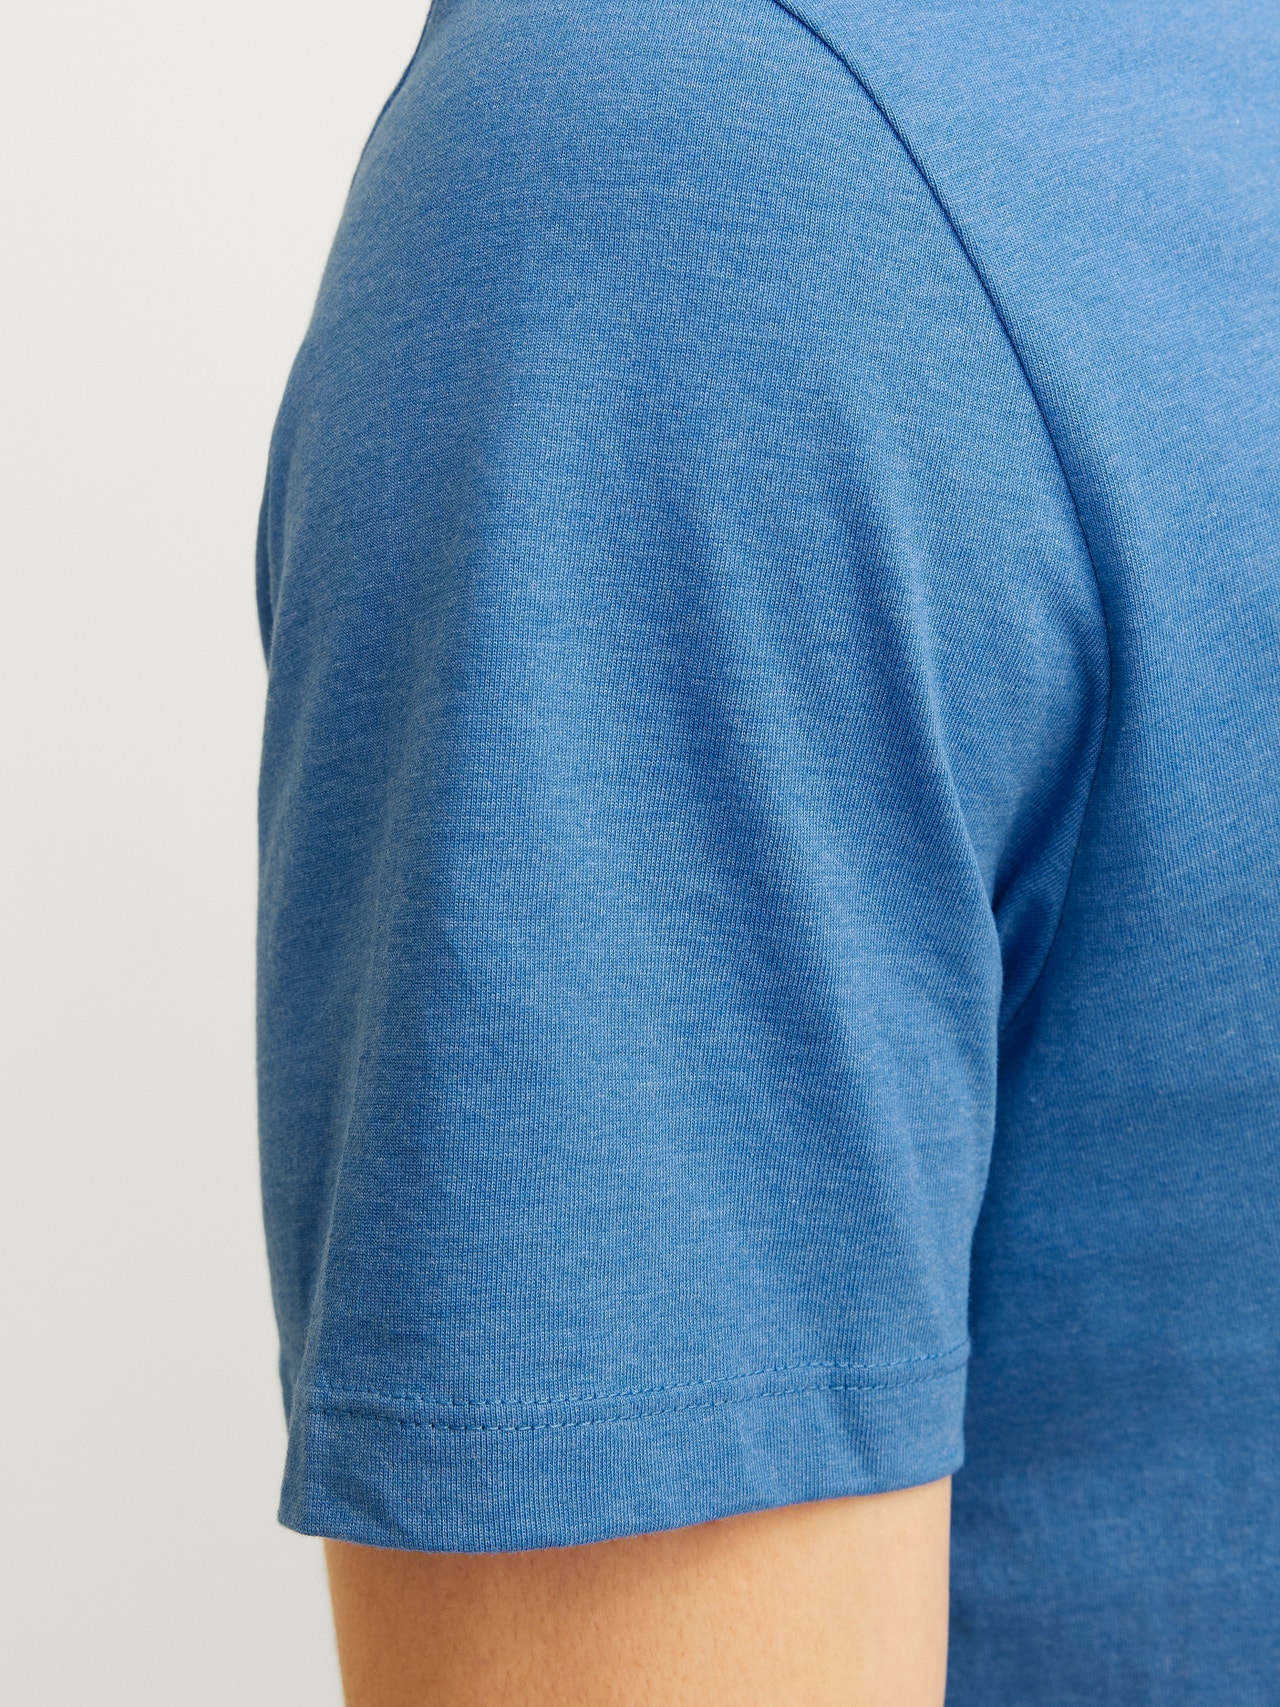 Jack & Jones Plain Round Neck T-shirt -French Blue - 12222887